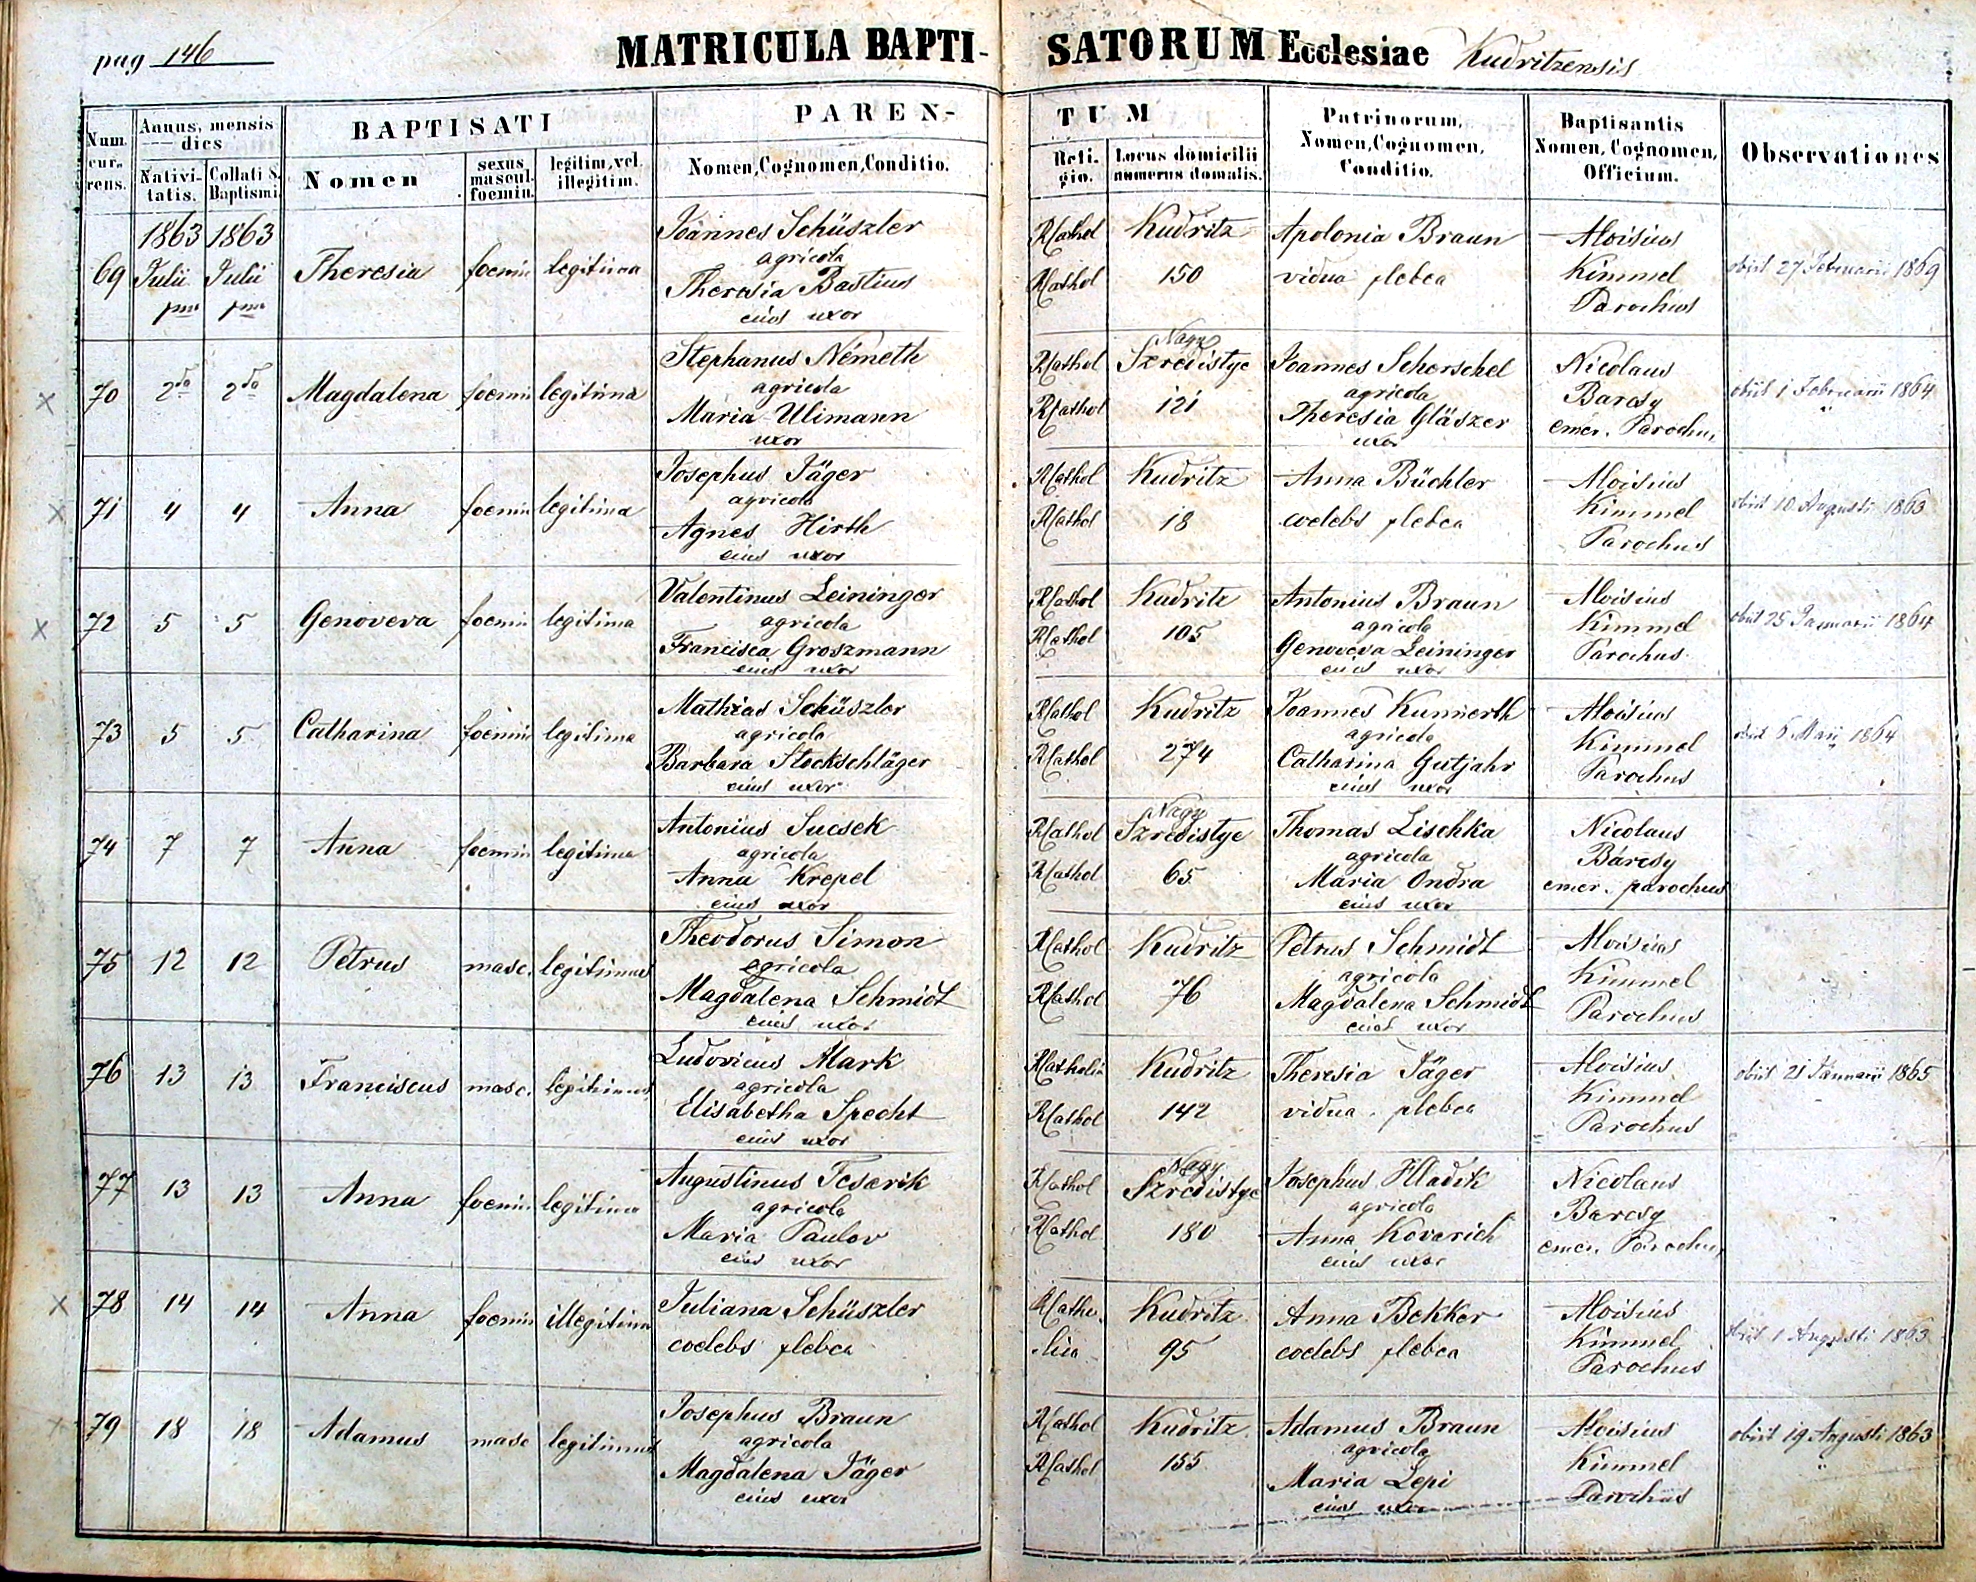 images/church_records/BIRTHS/1852-1870B/146